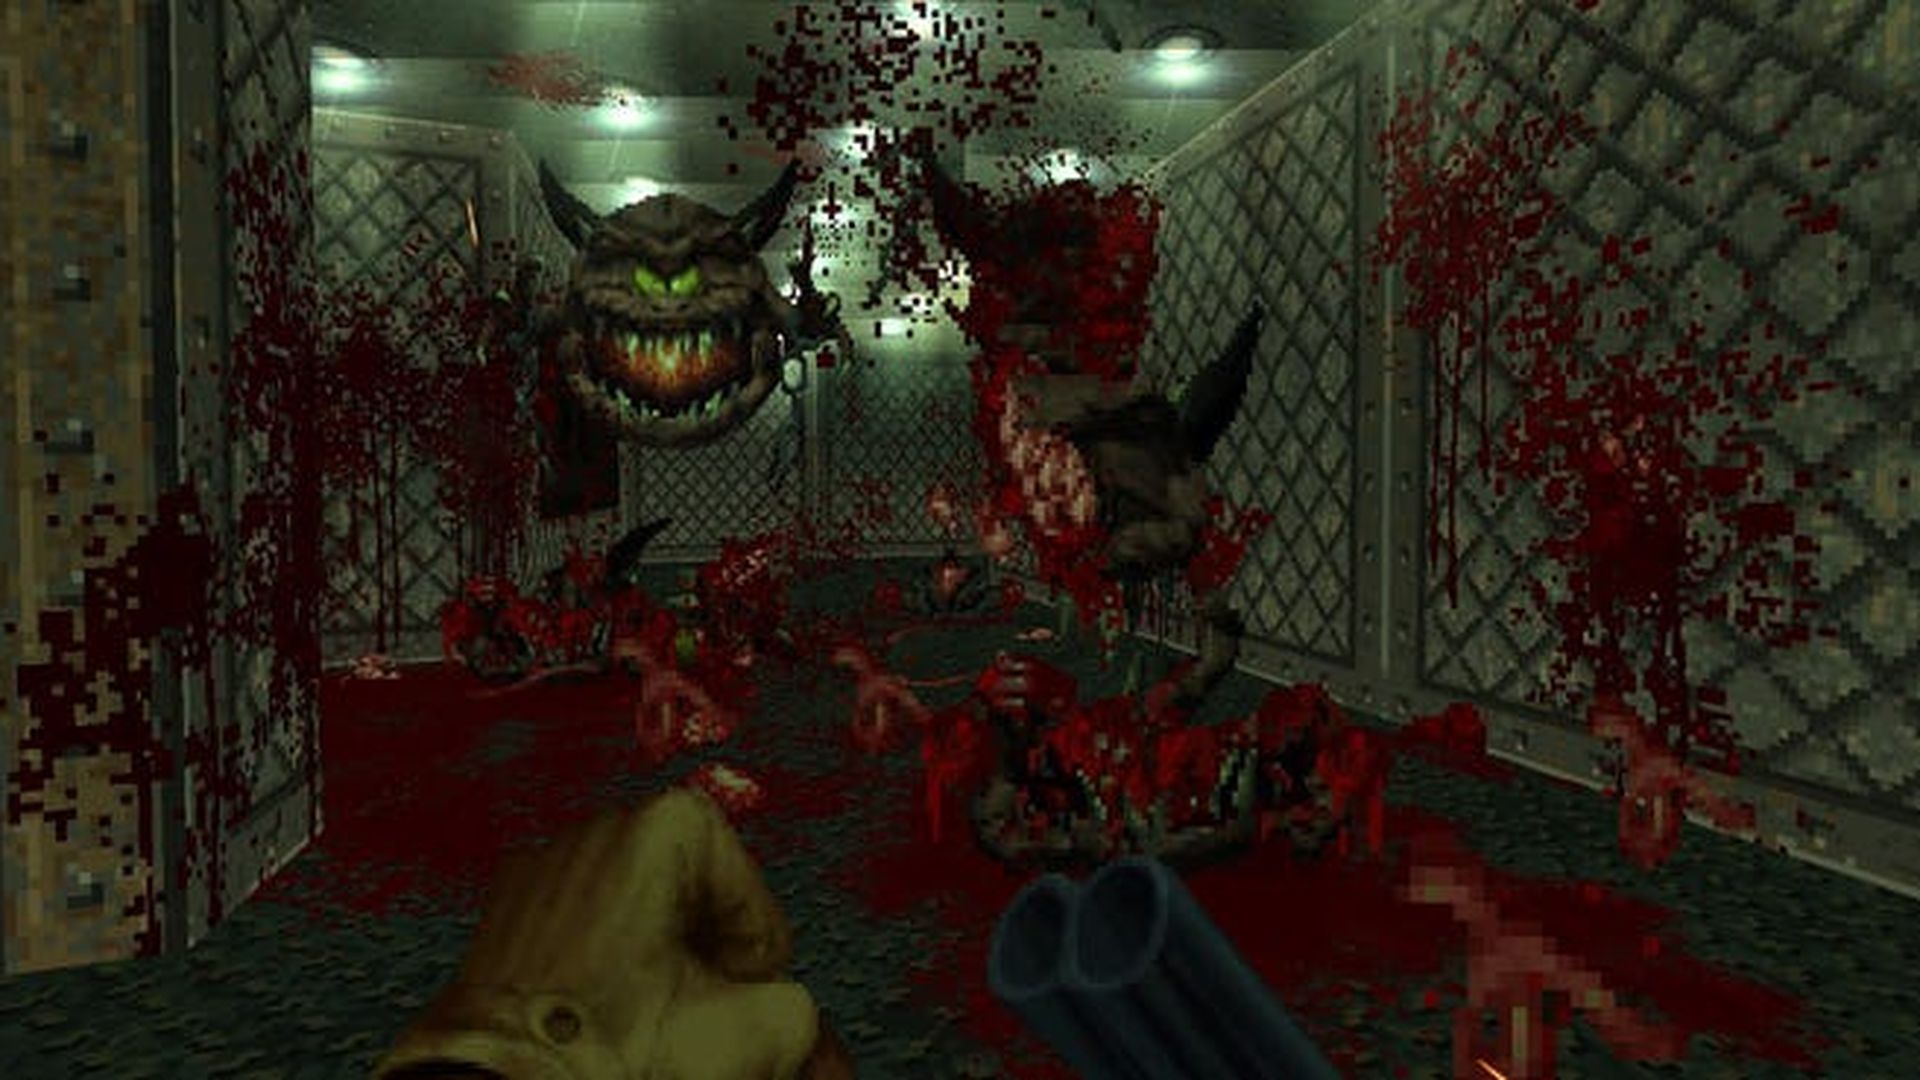 Entri Doom 64 baru muncul di papan peringkat Eropa